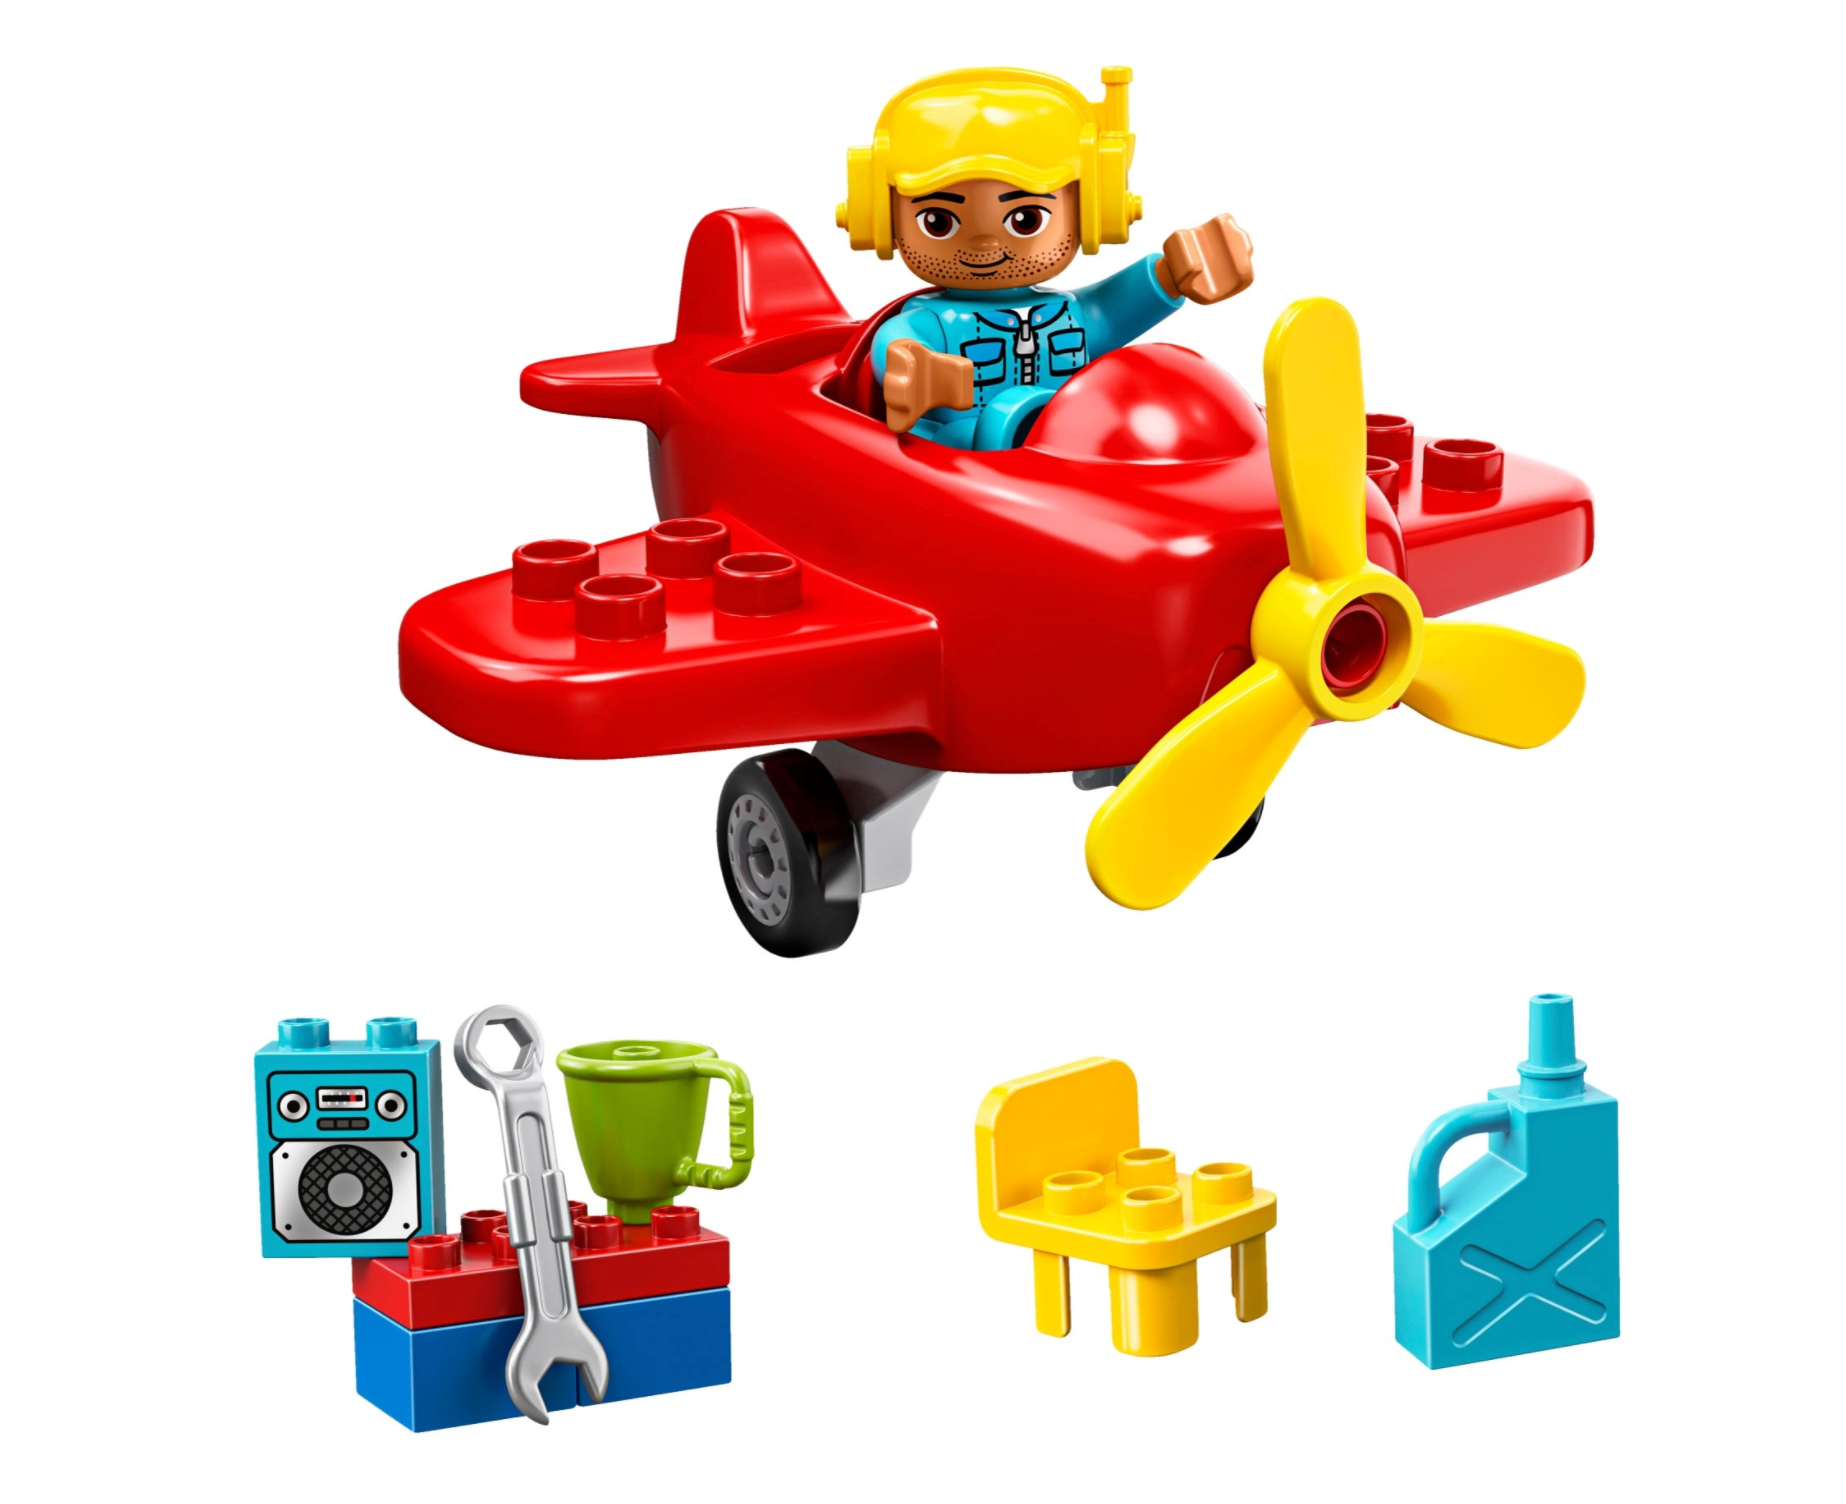 LEGO: DUPLO - Plane